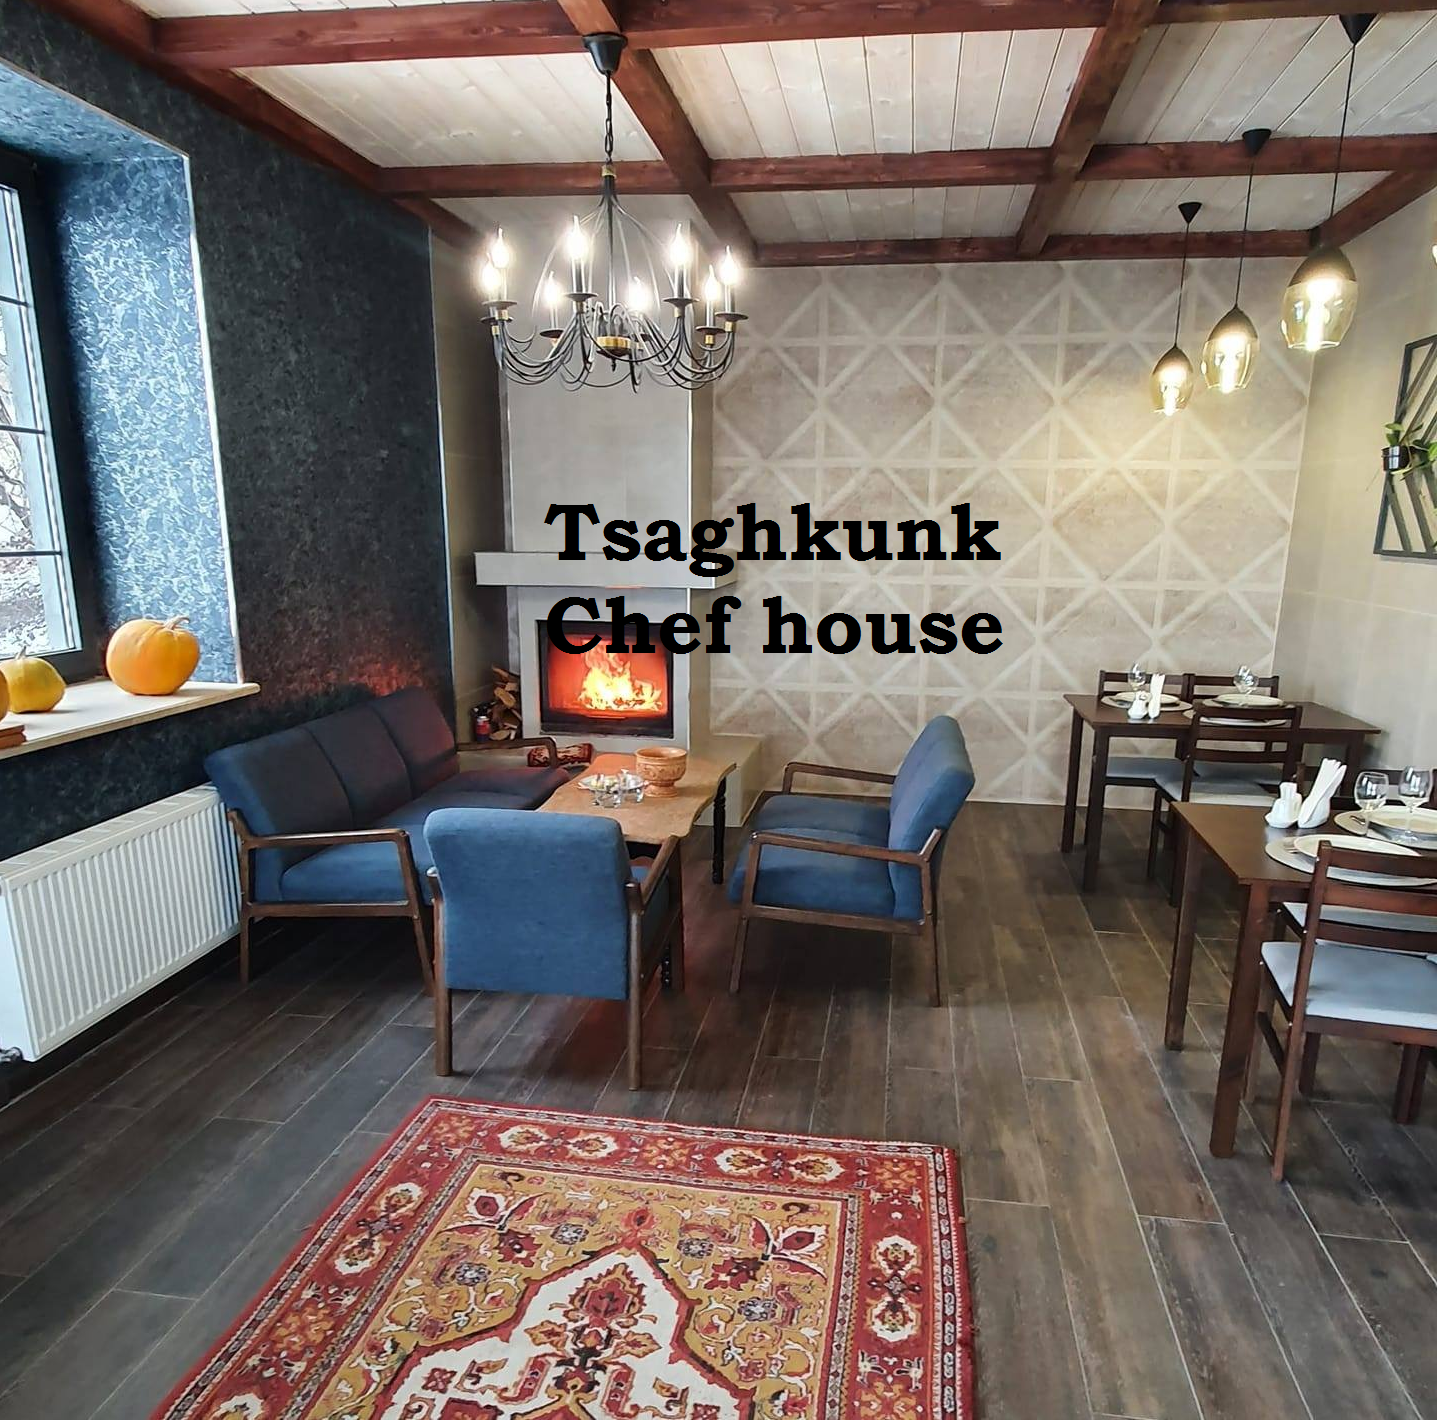 Image result for Tsaghkunk Chef house